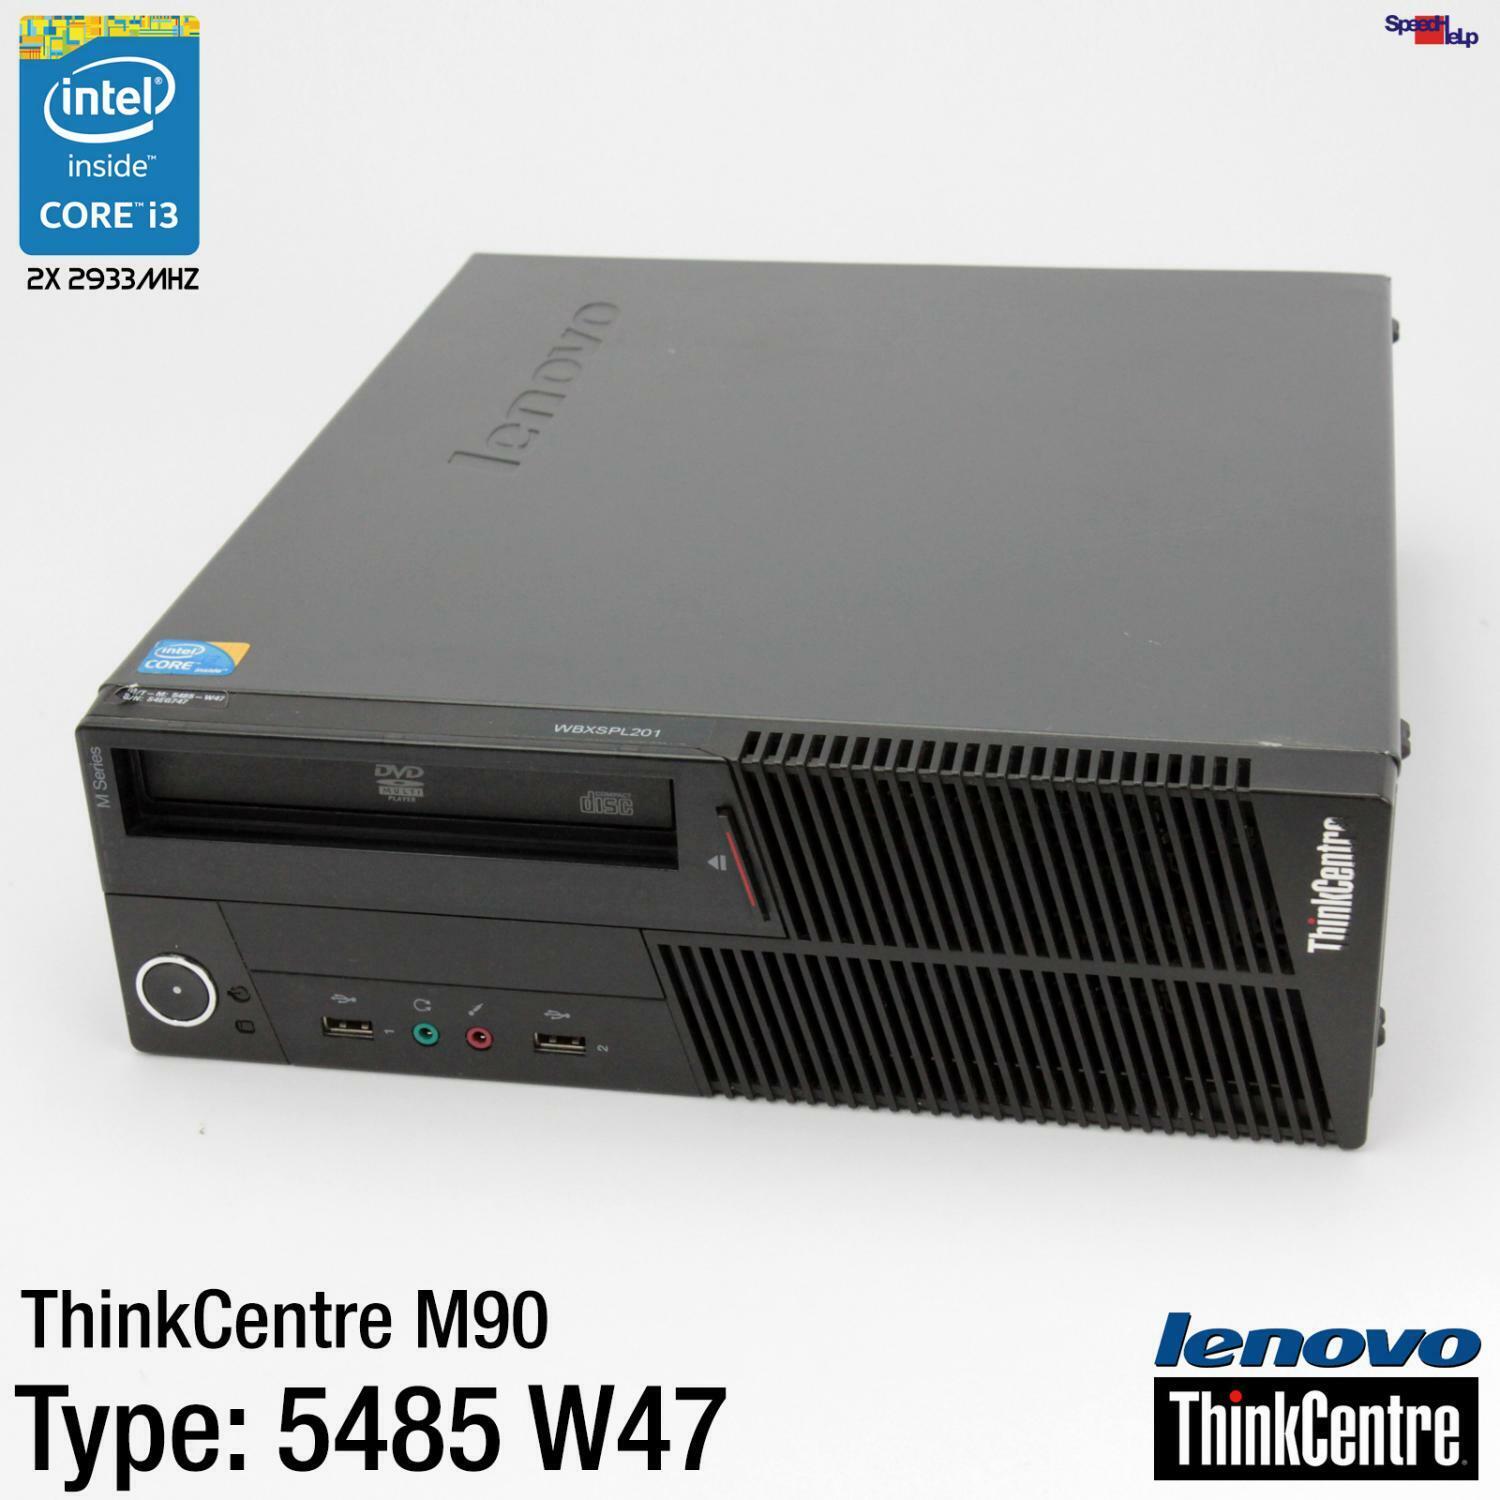 IBM Lenovo ThinkCentre M90 Type: 5485 W47 Computer PC RS-232 Windows XP Pos SSD